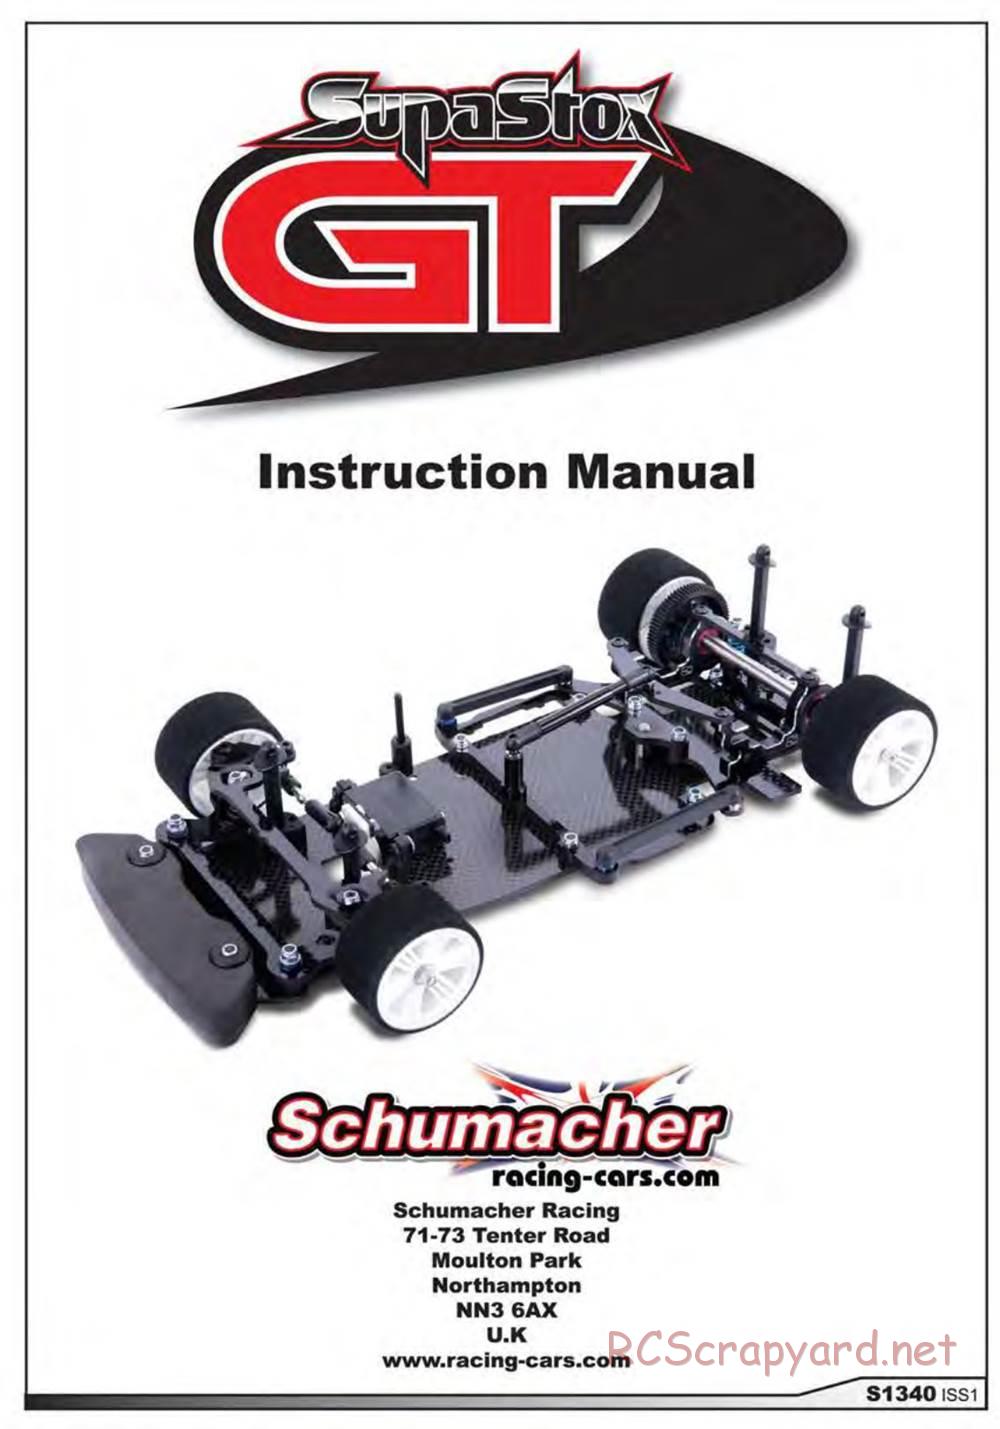 Schumacher - SupaStox GT - Manual - Page 1